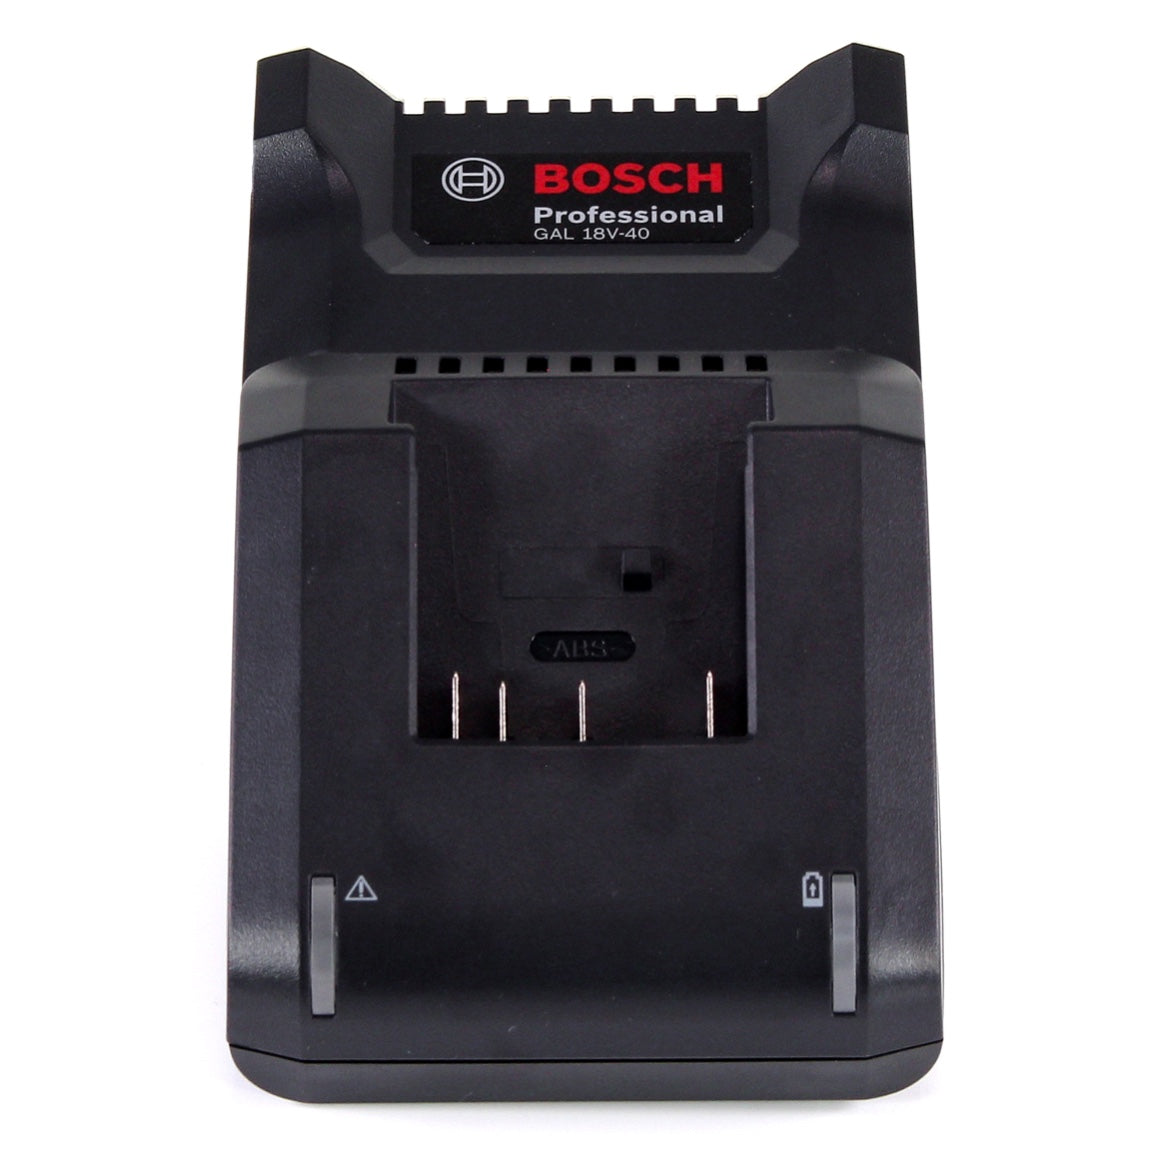 Bosch Starter Set 1x GBA 18 V 4,0 Ah Akku + GAL 18V-40 Ladegerät ( 1600A01B9Y ) - Toolbrothers